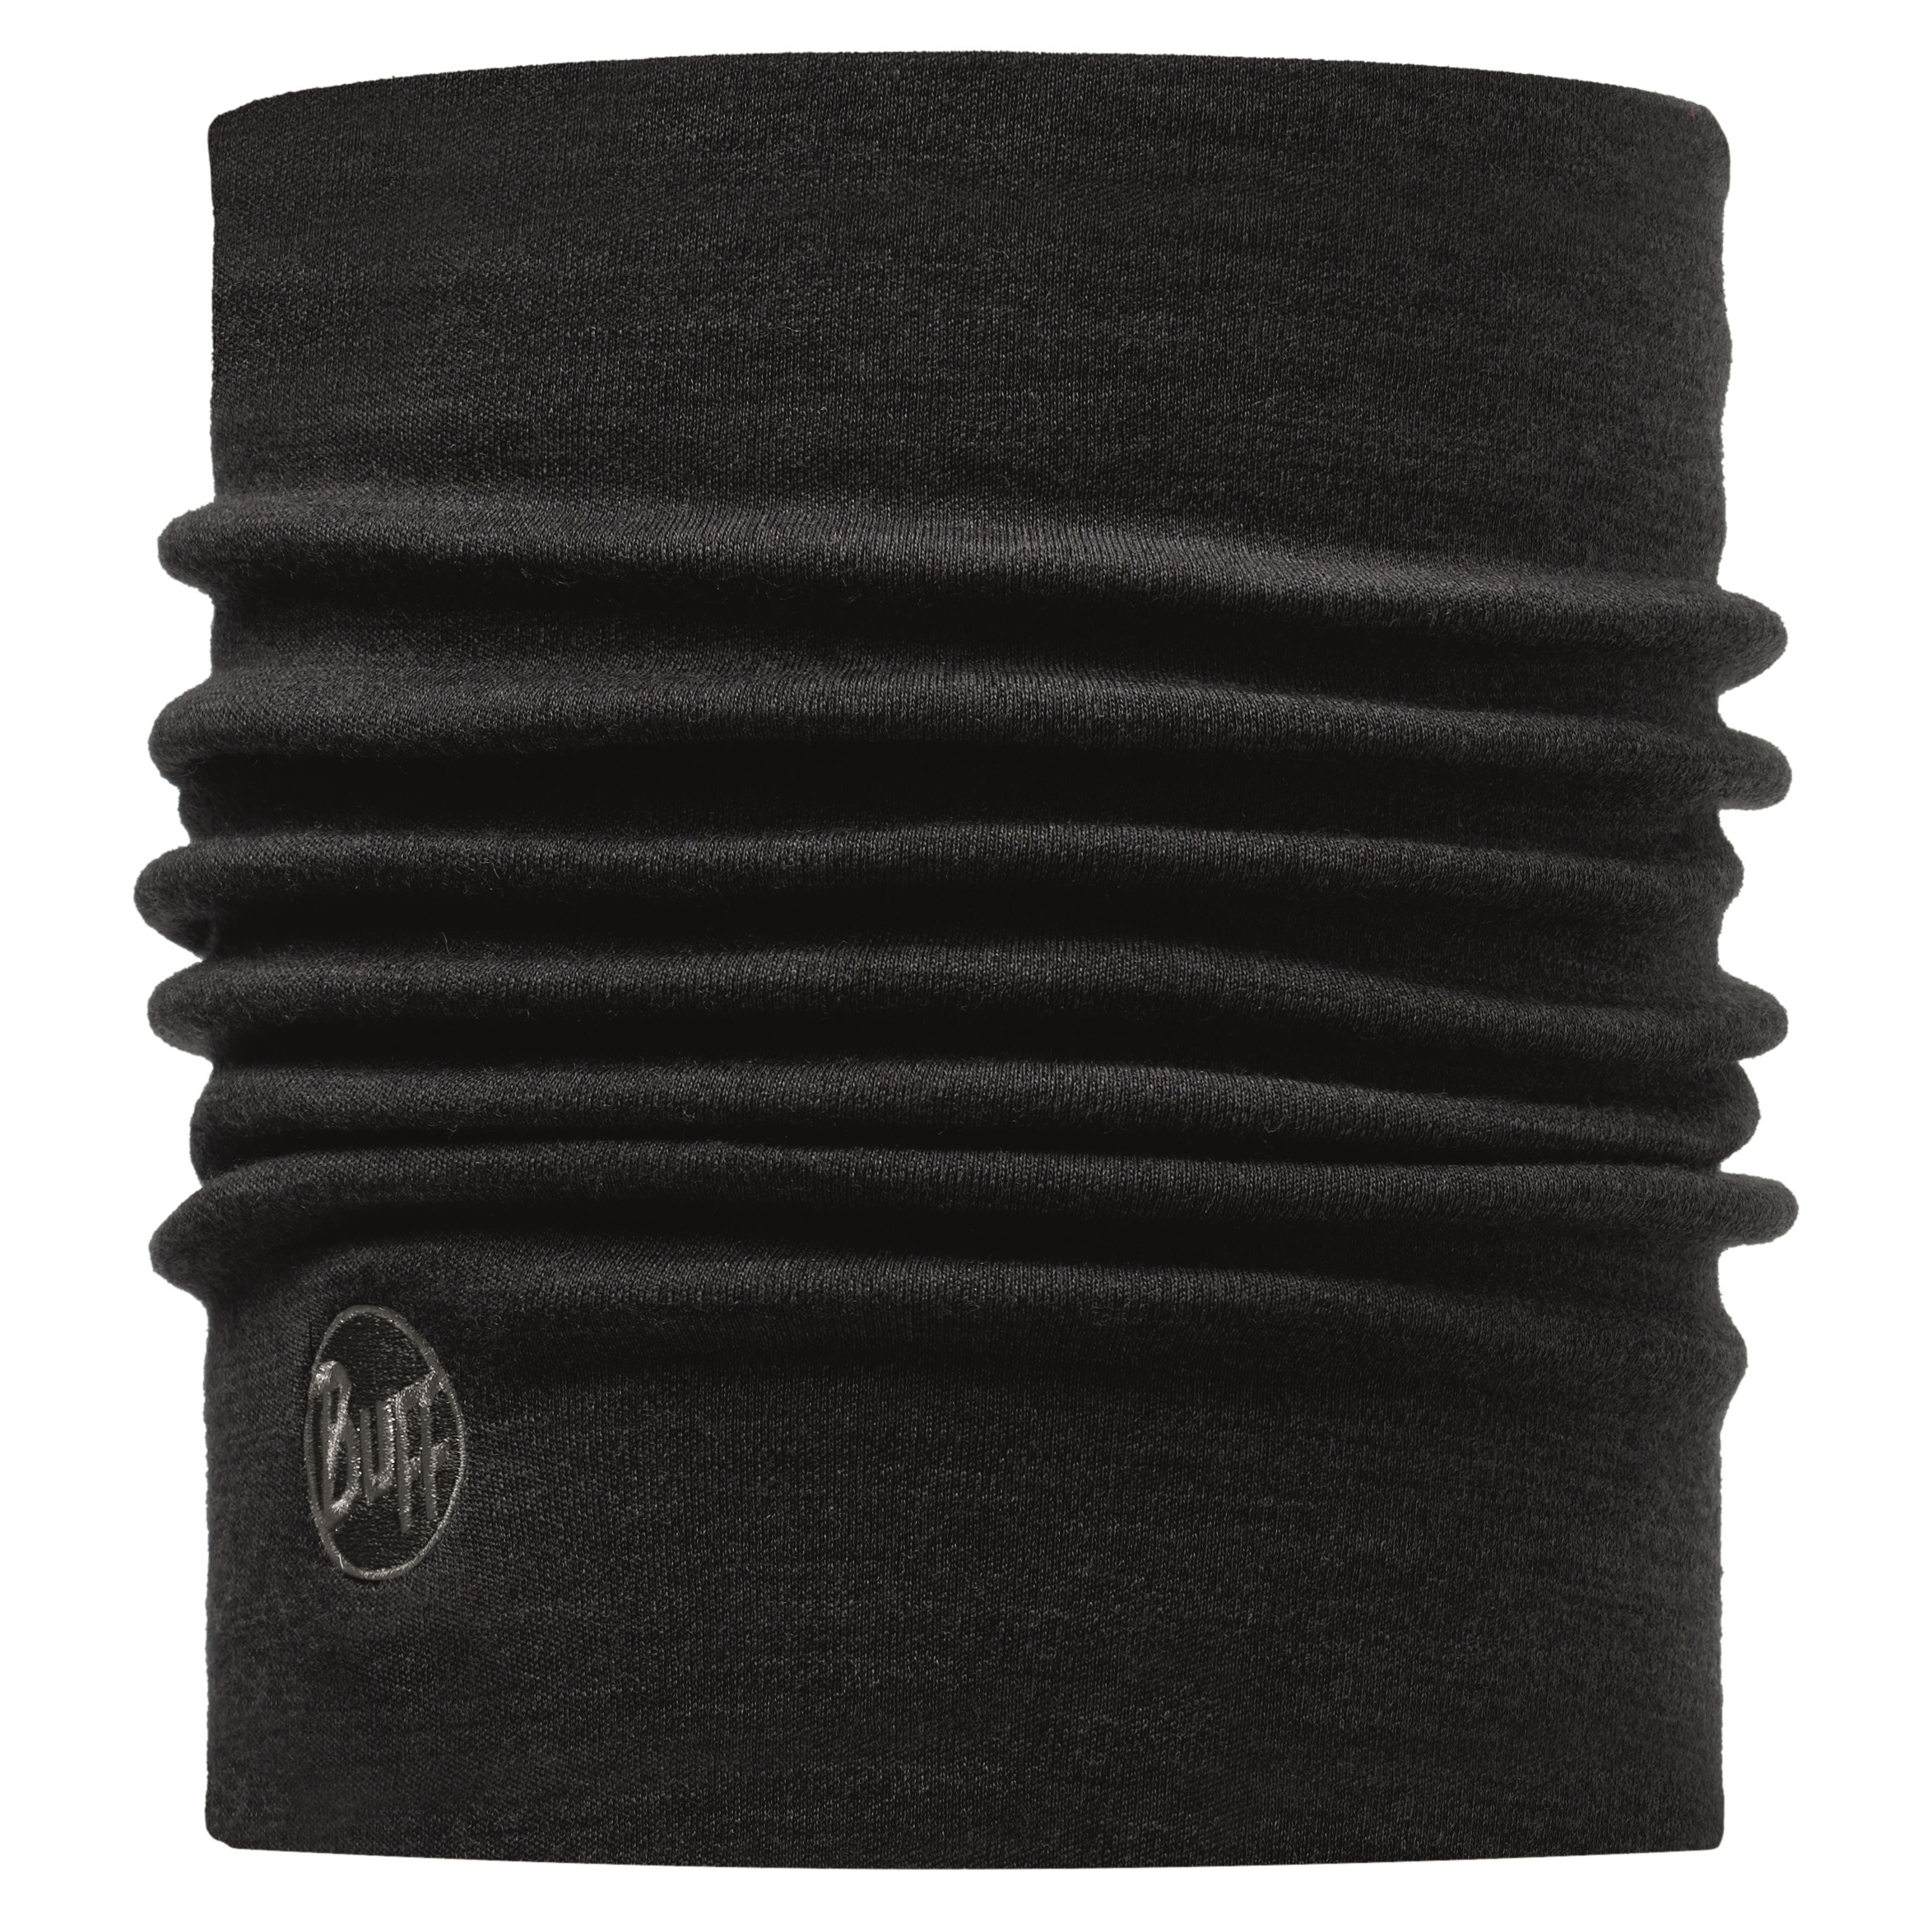 Heavyweight Merino Wool Solid Black